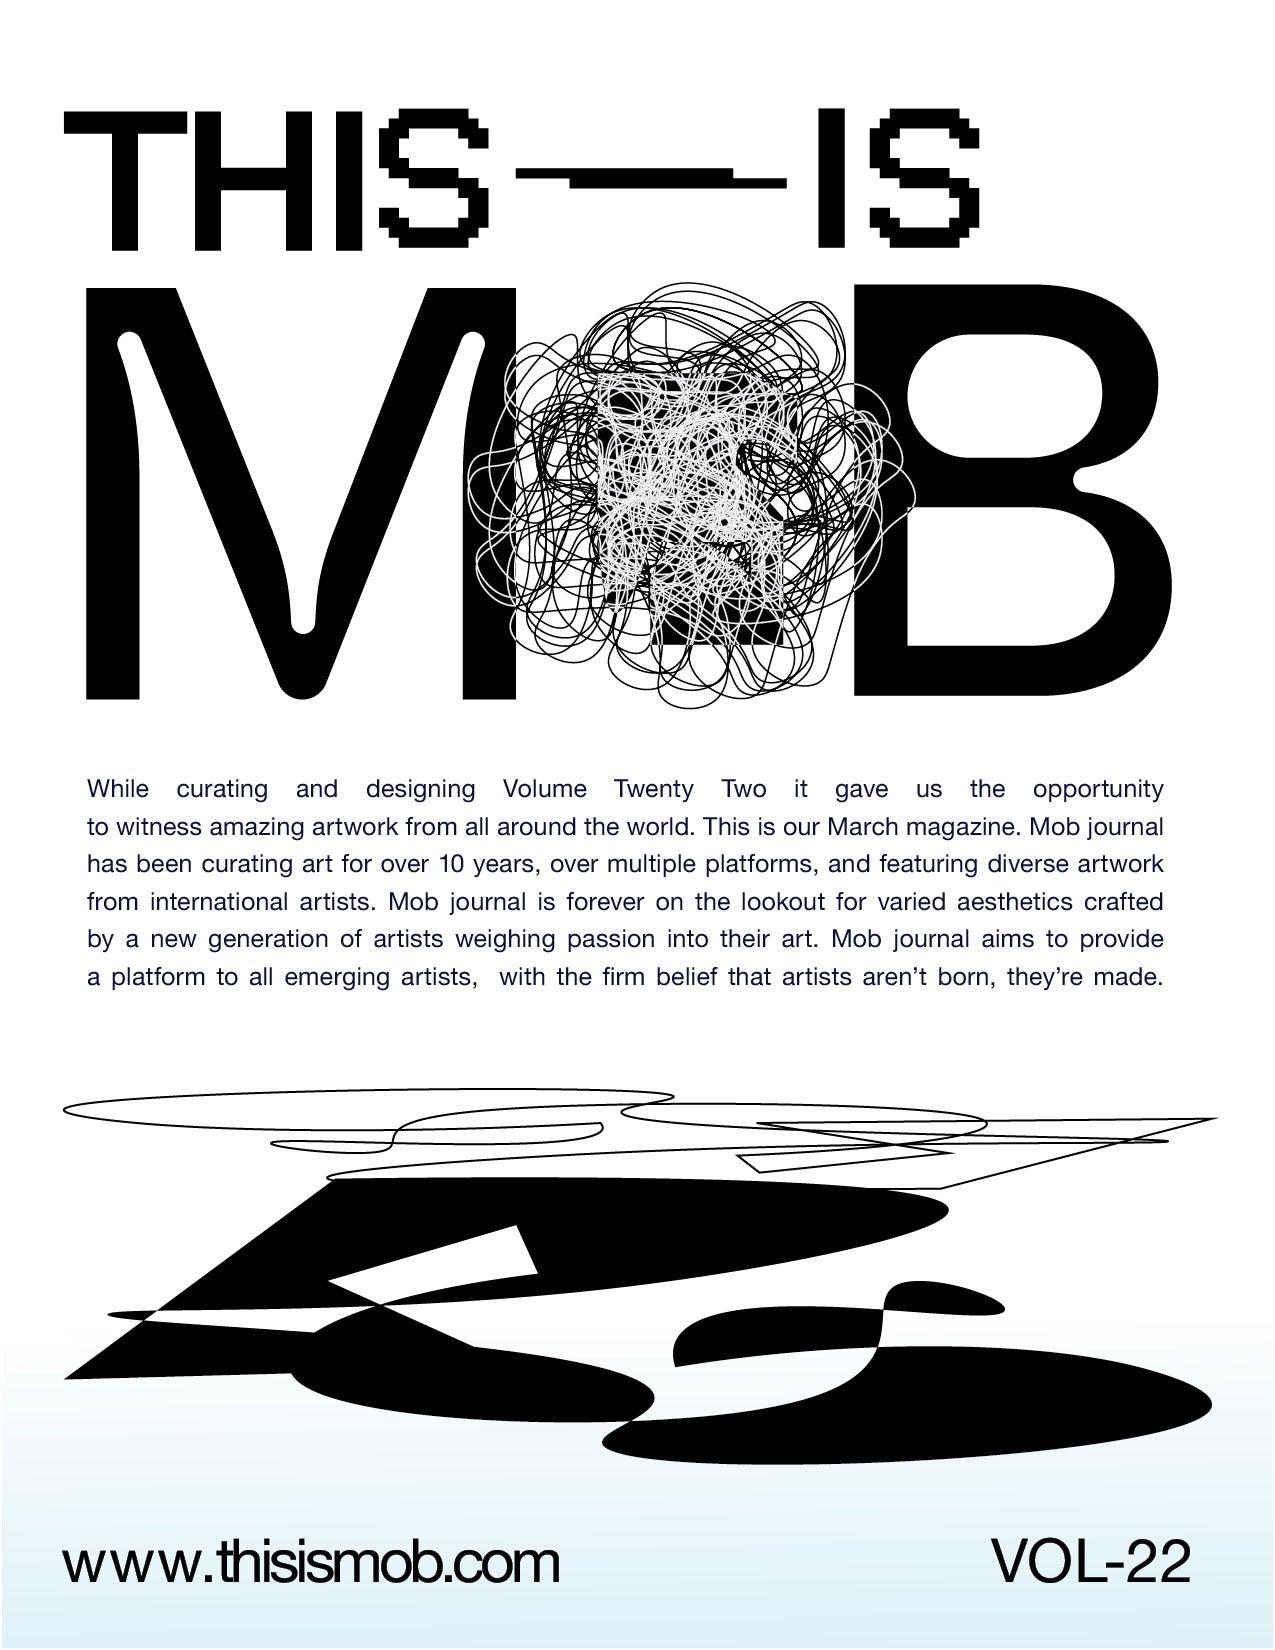 MOB JOURNAL | VOLUME TWENTY TWO | ISSUE #13 - Mob Journal